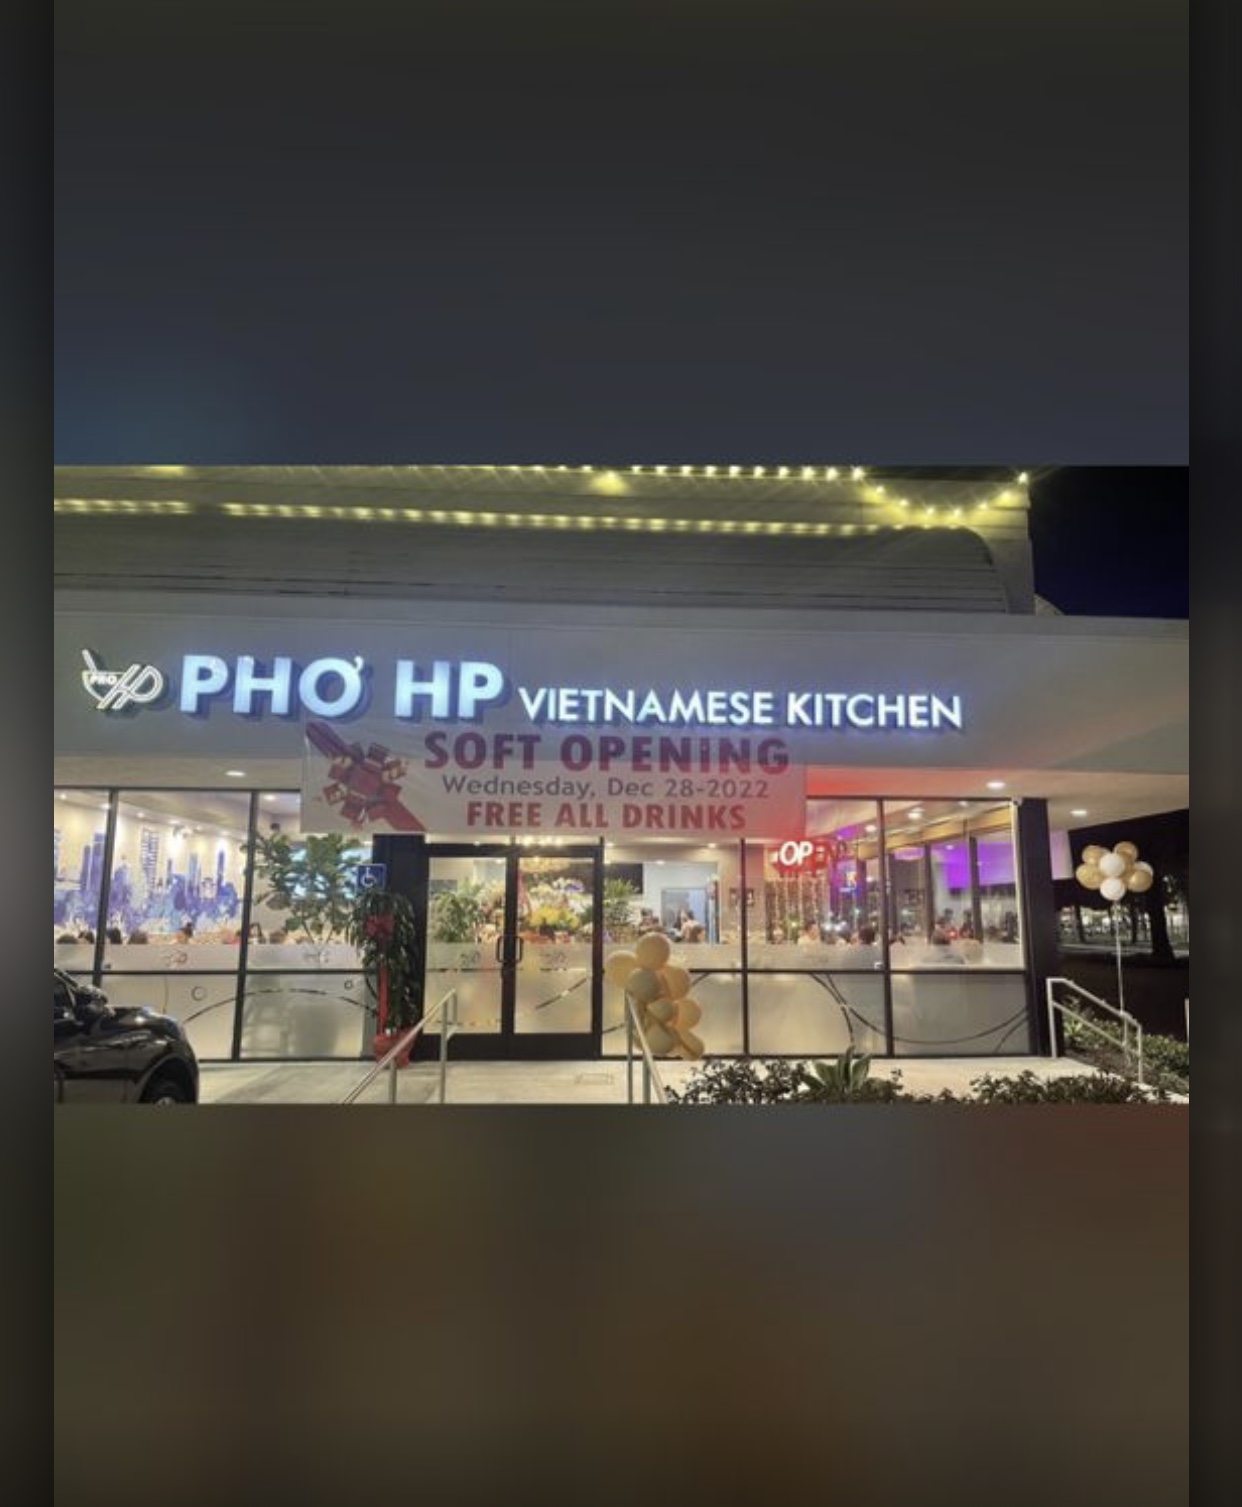 Pho HP Vietnamese Kitchen